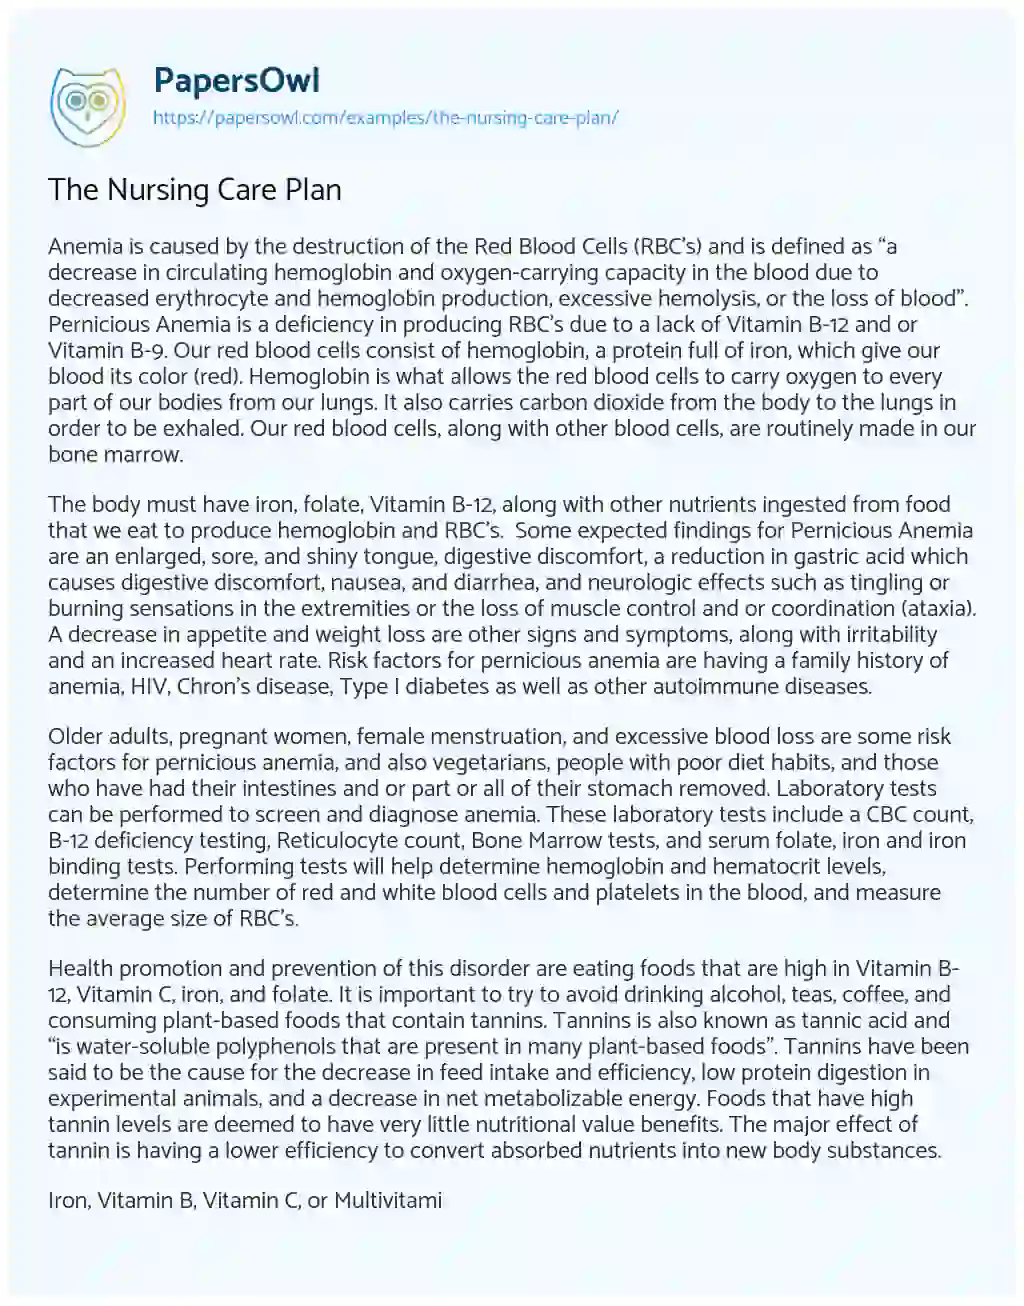 Essay on The Nursing Care Plan